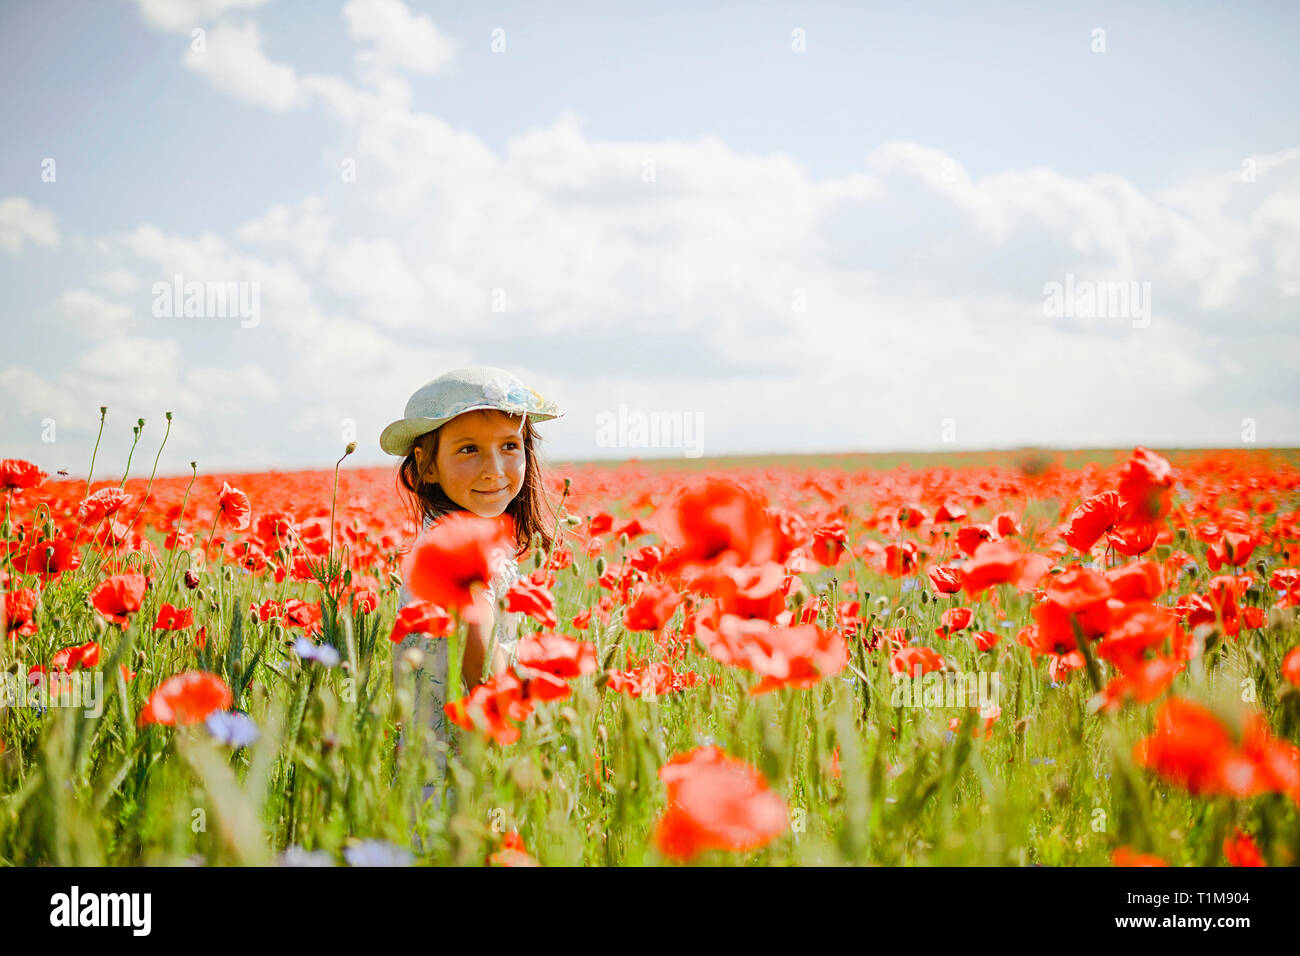 Girl in sunny, idyllic rural red poppy field Stock Photo